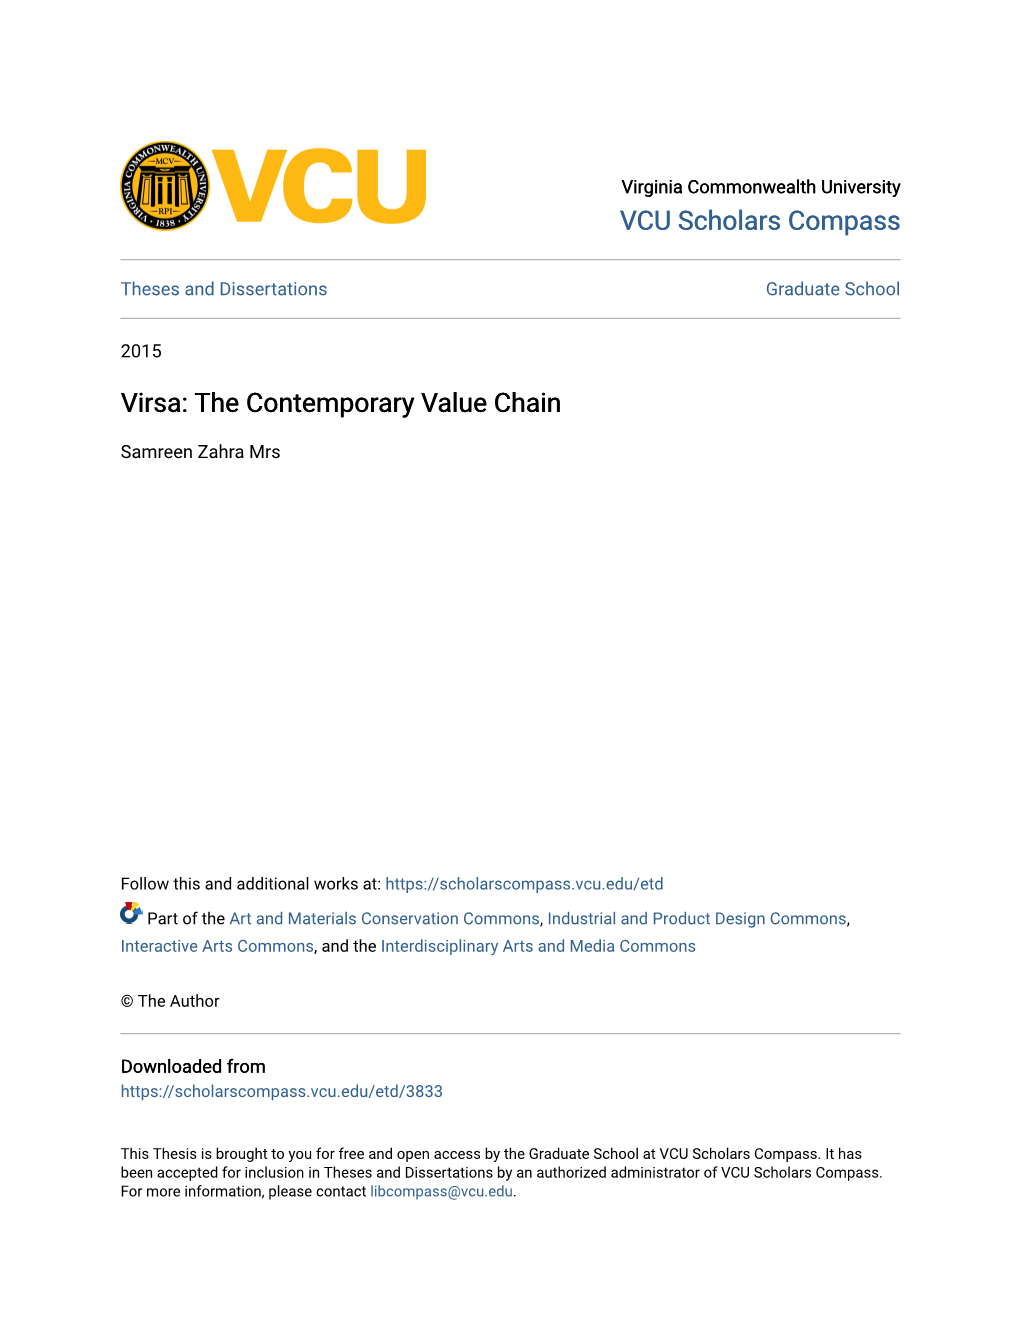 Virsa: the Contemporary Value Chain